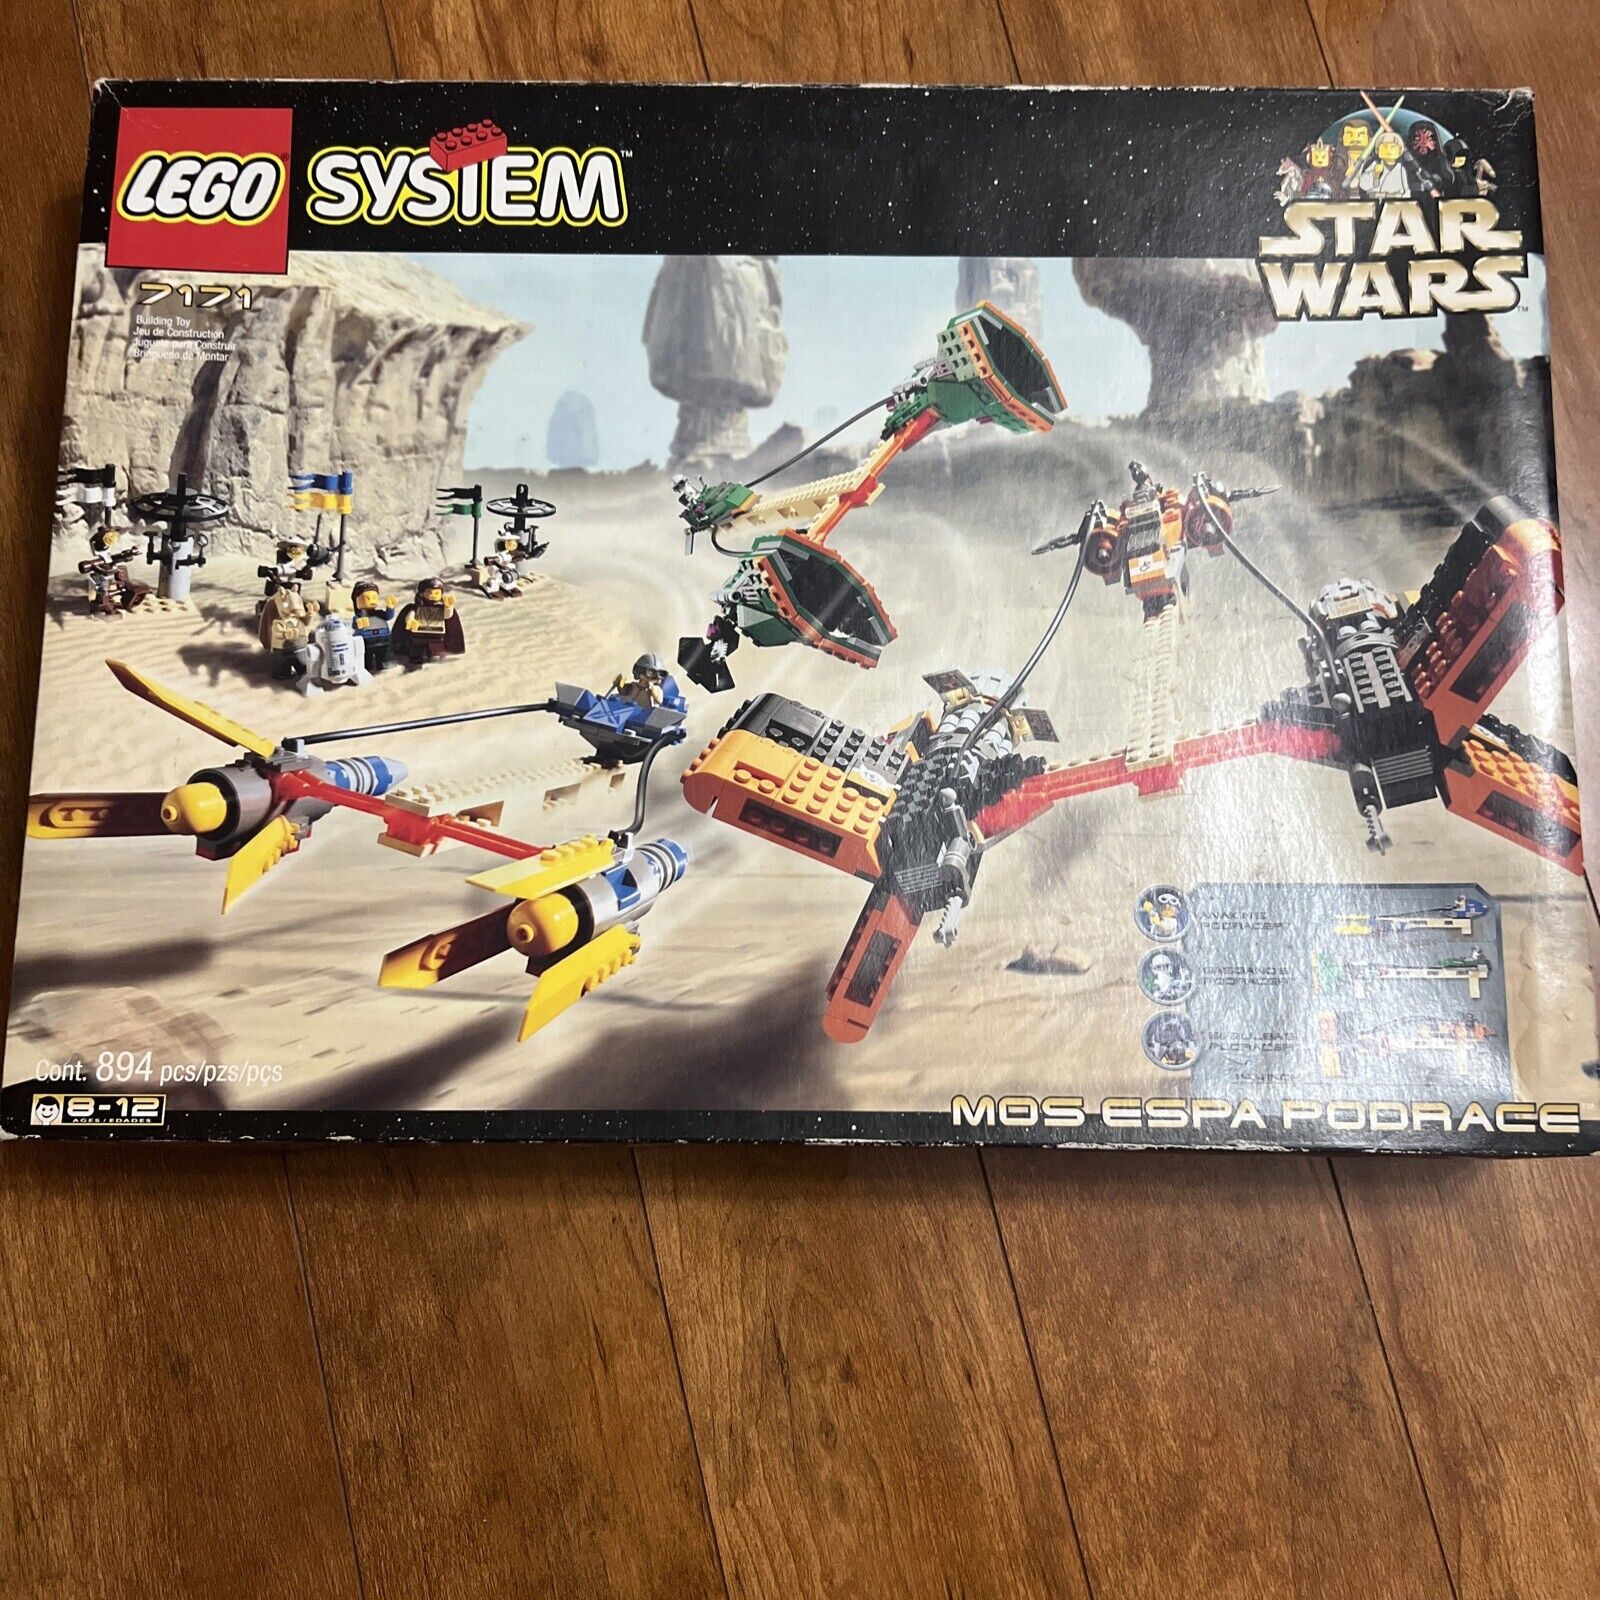 Lego Star Wars 7171 MOS ESPA POD RACE (see description)